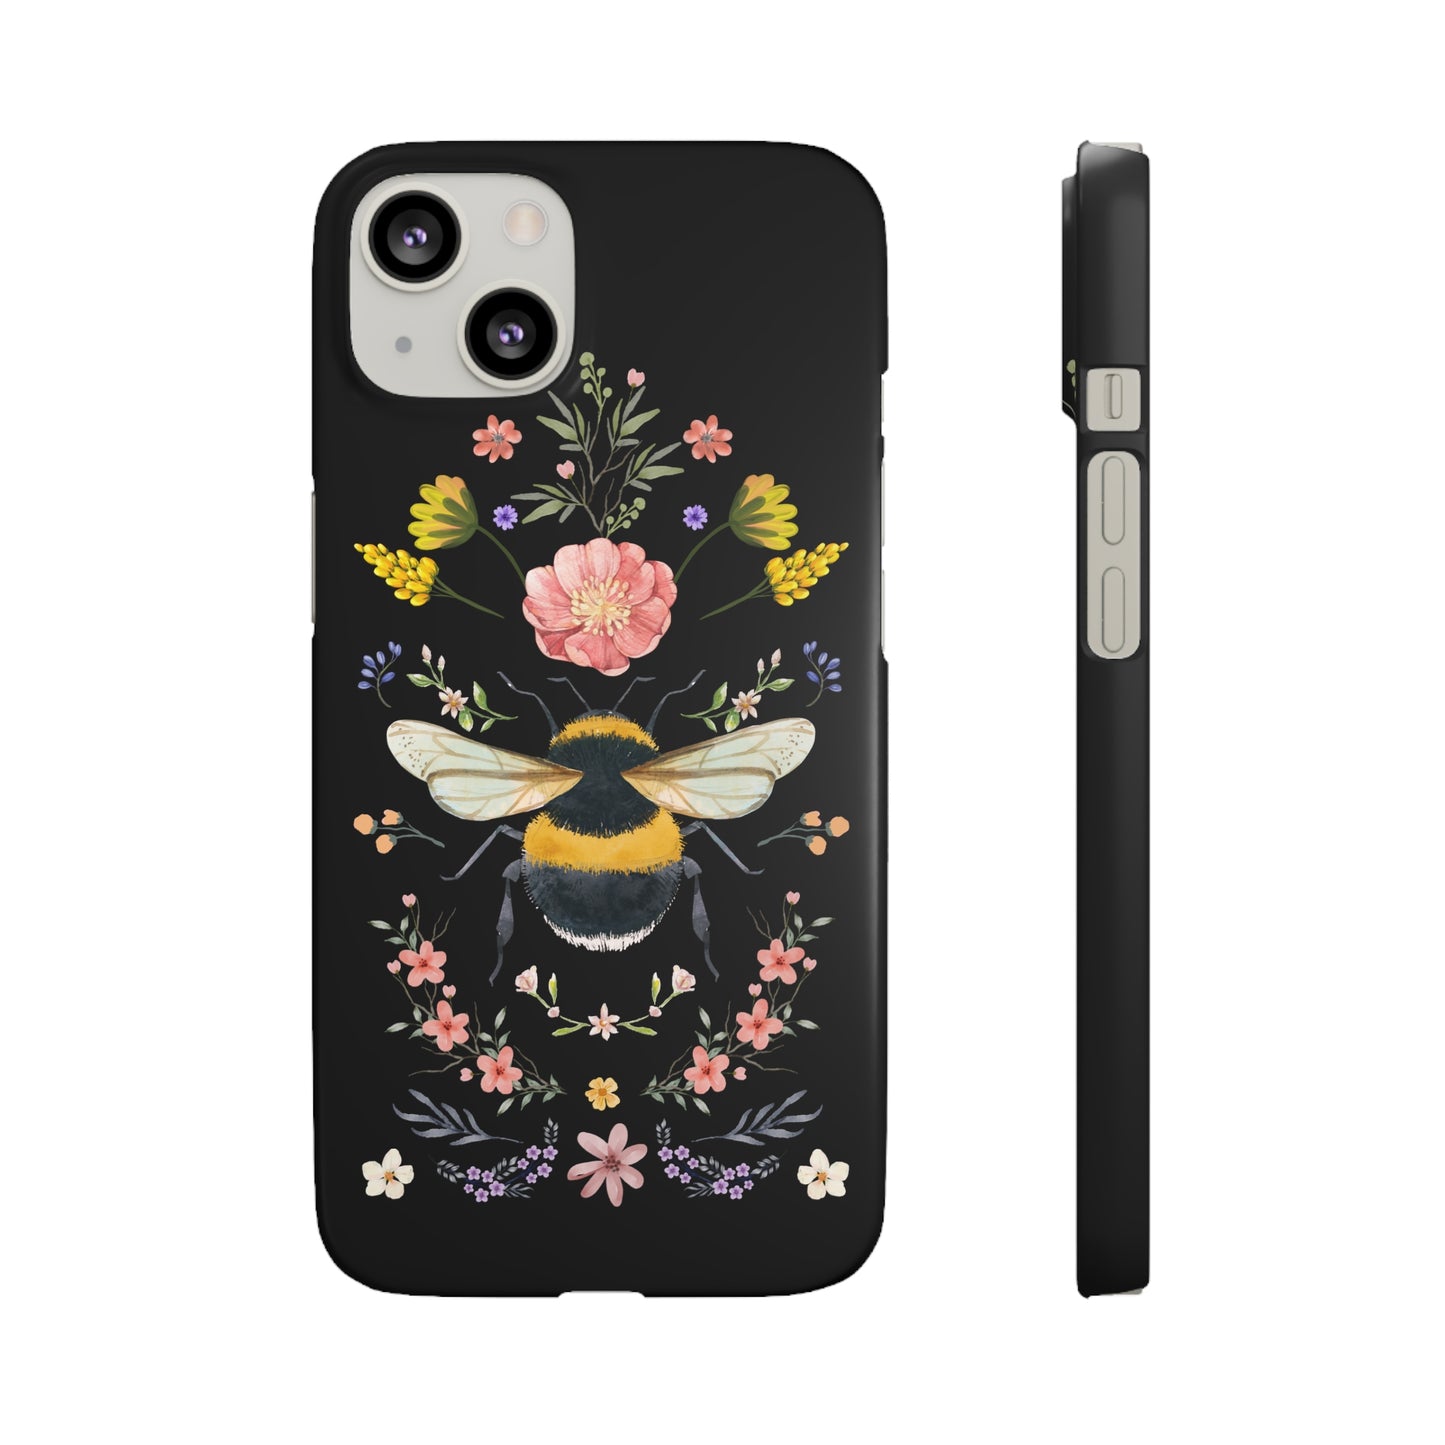 Bumblebee Cases